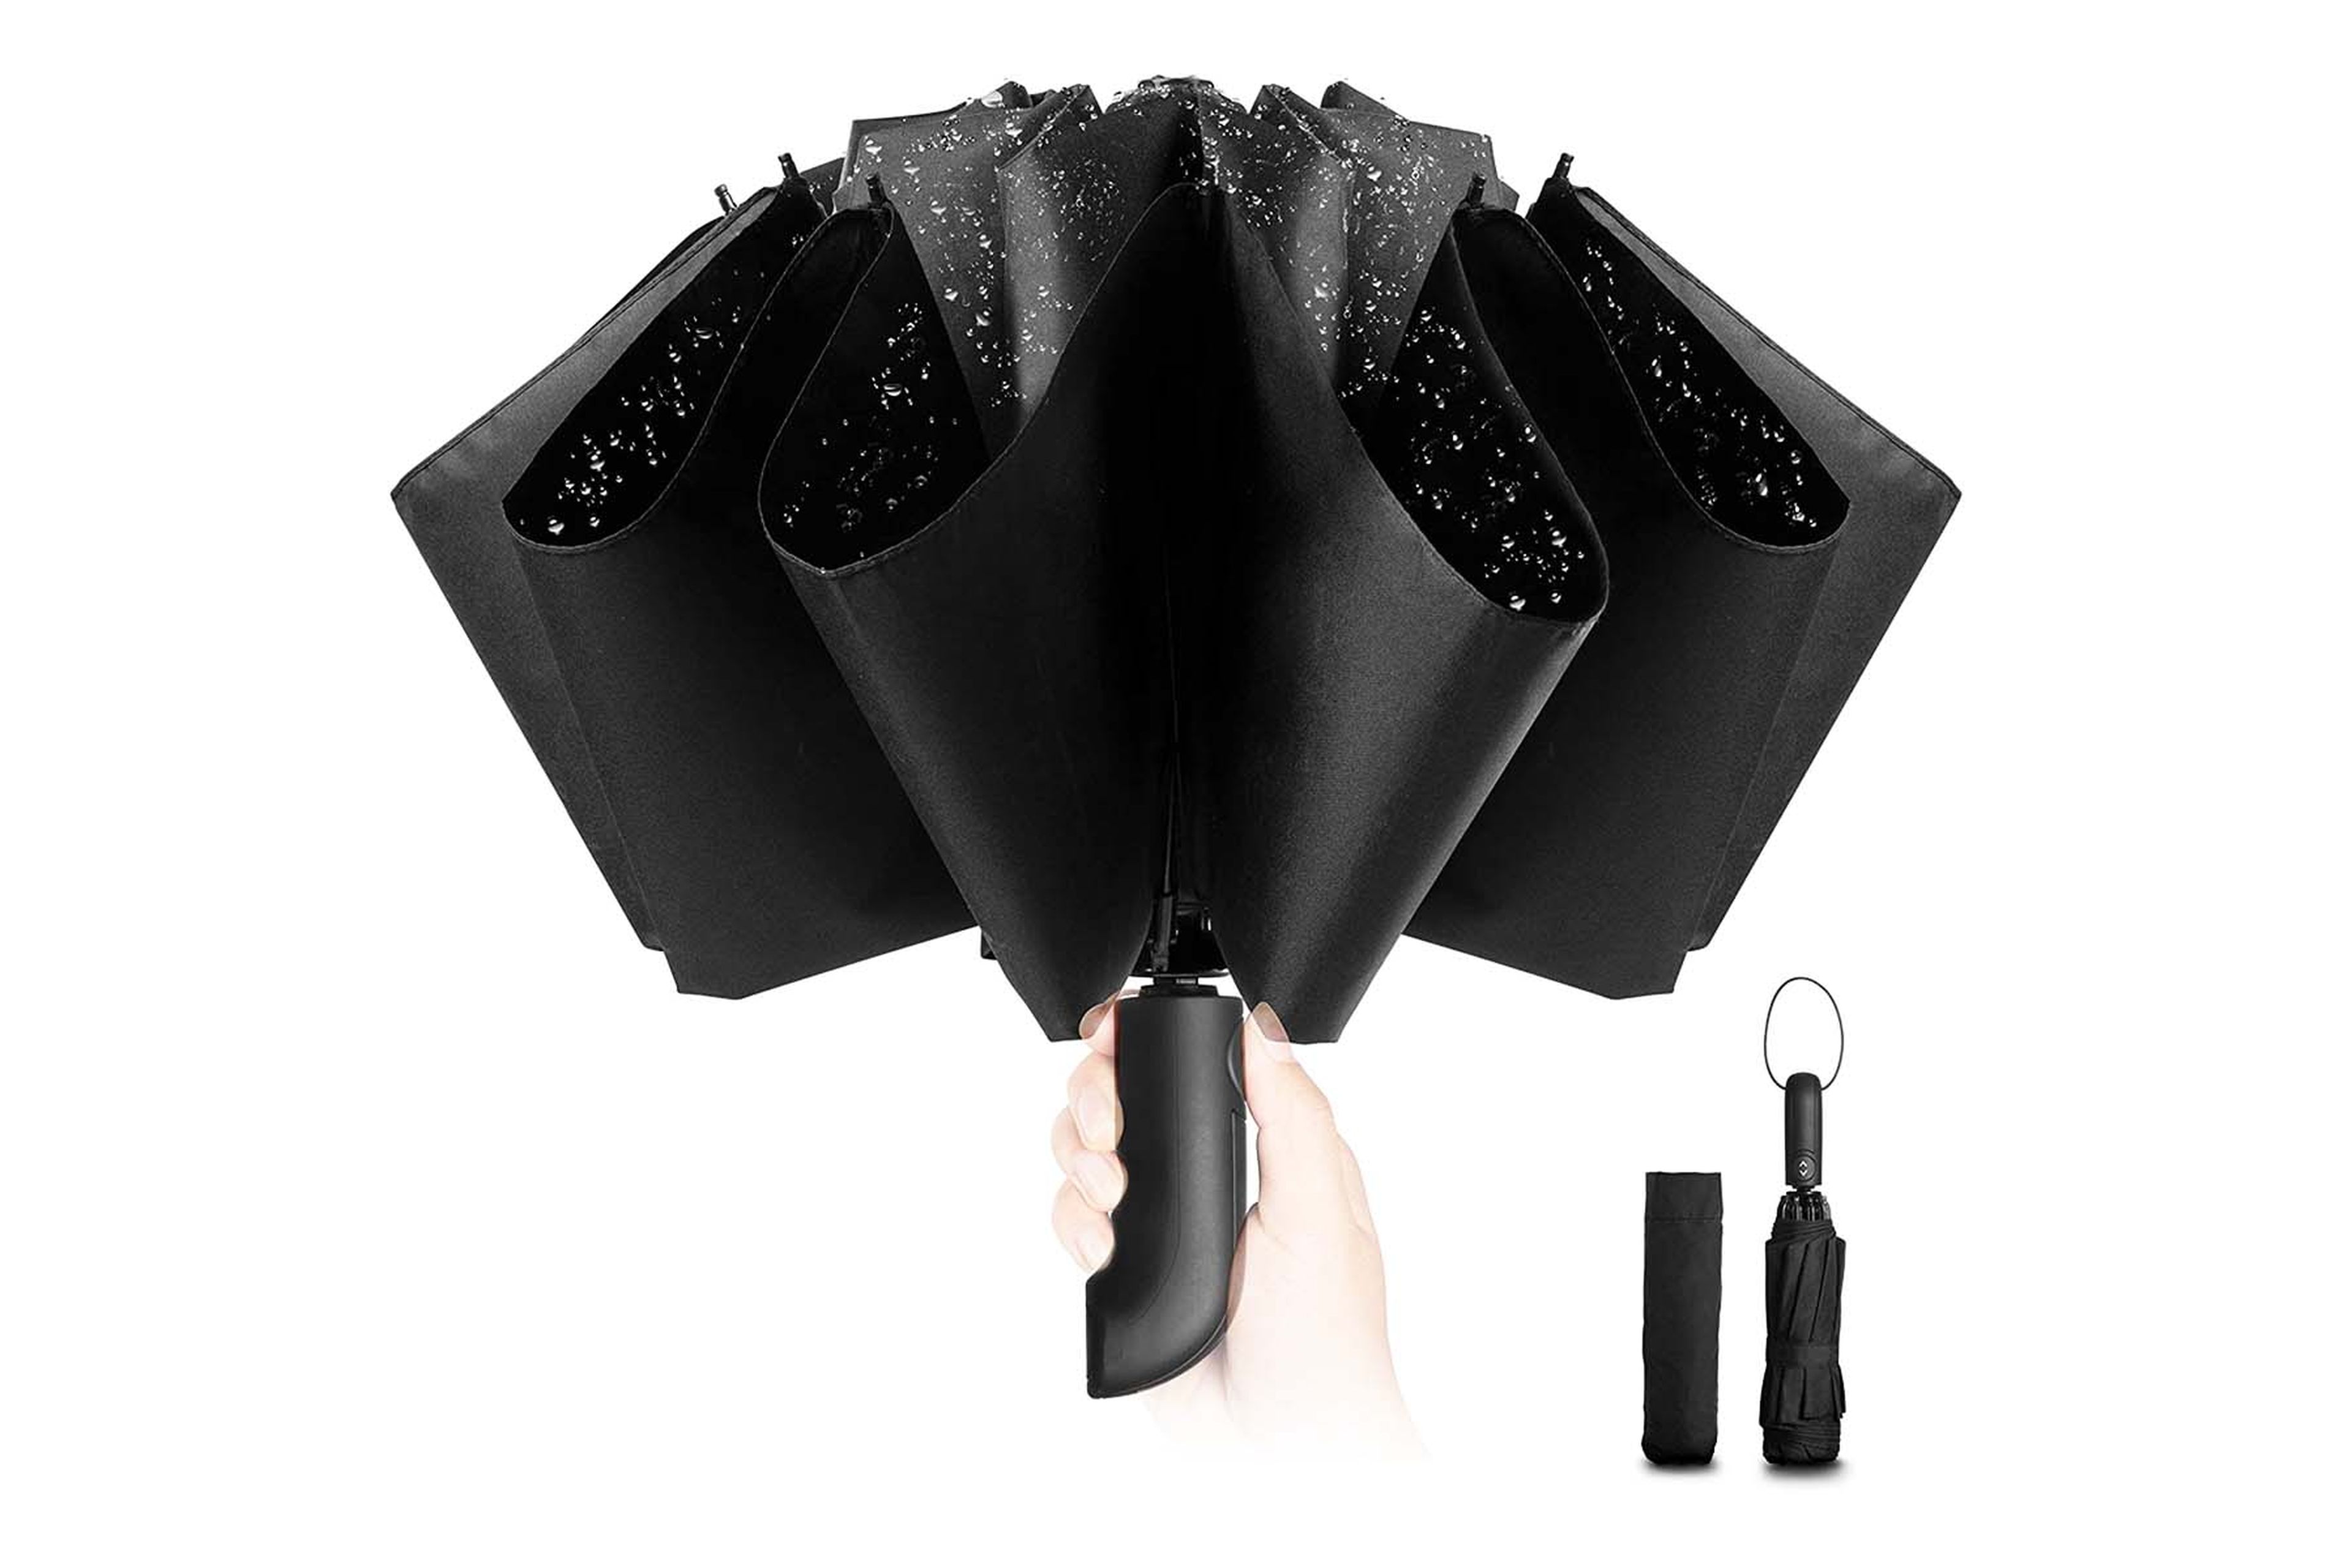 Conlun Inverted Umbrella